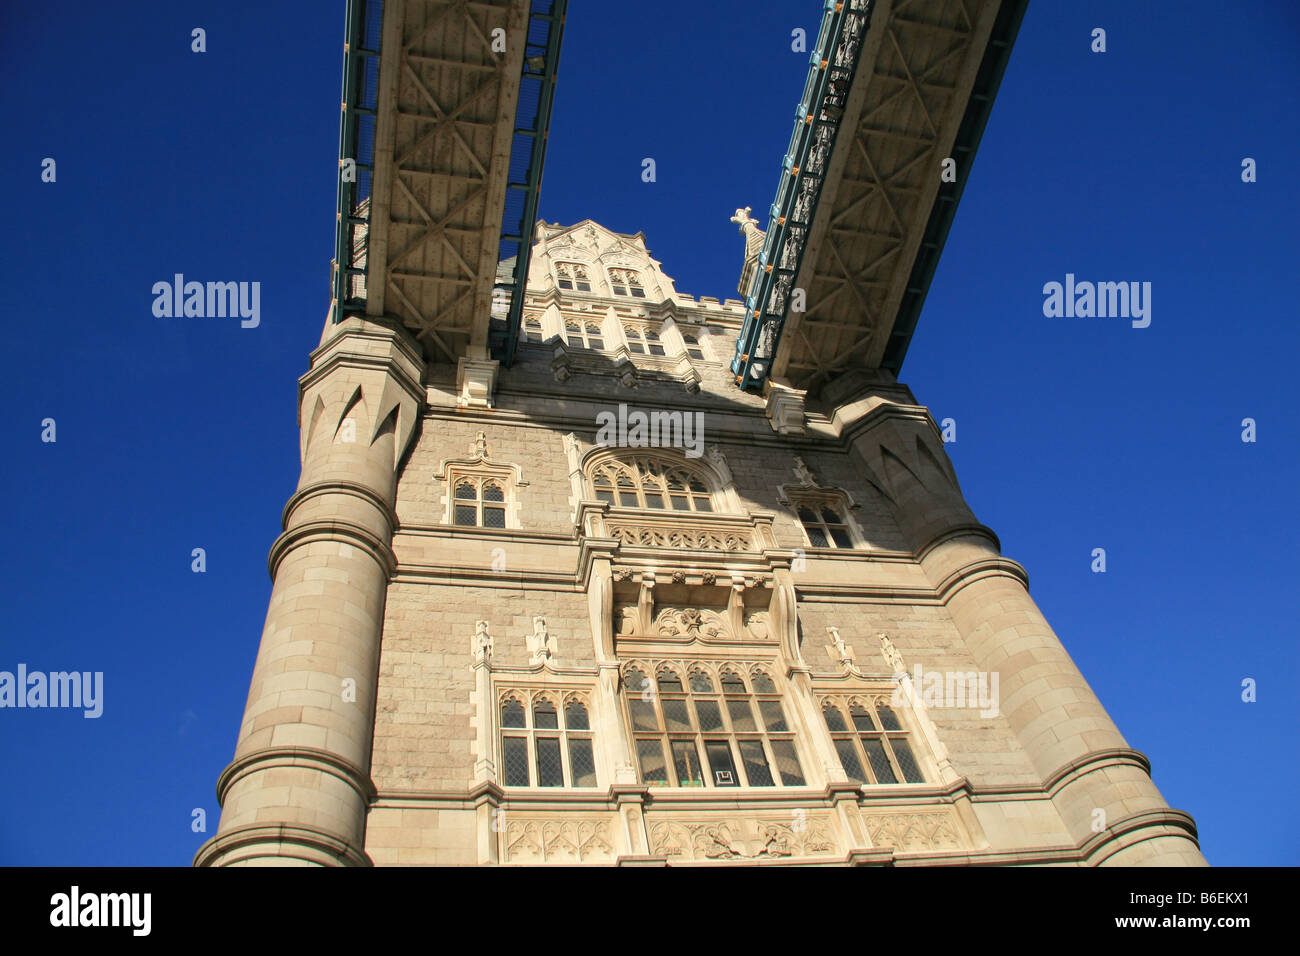 The northern tower and overhead walkways on Tower, Bridge, London Stock Photo